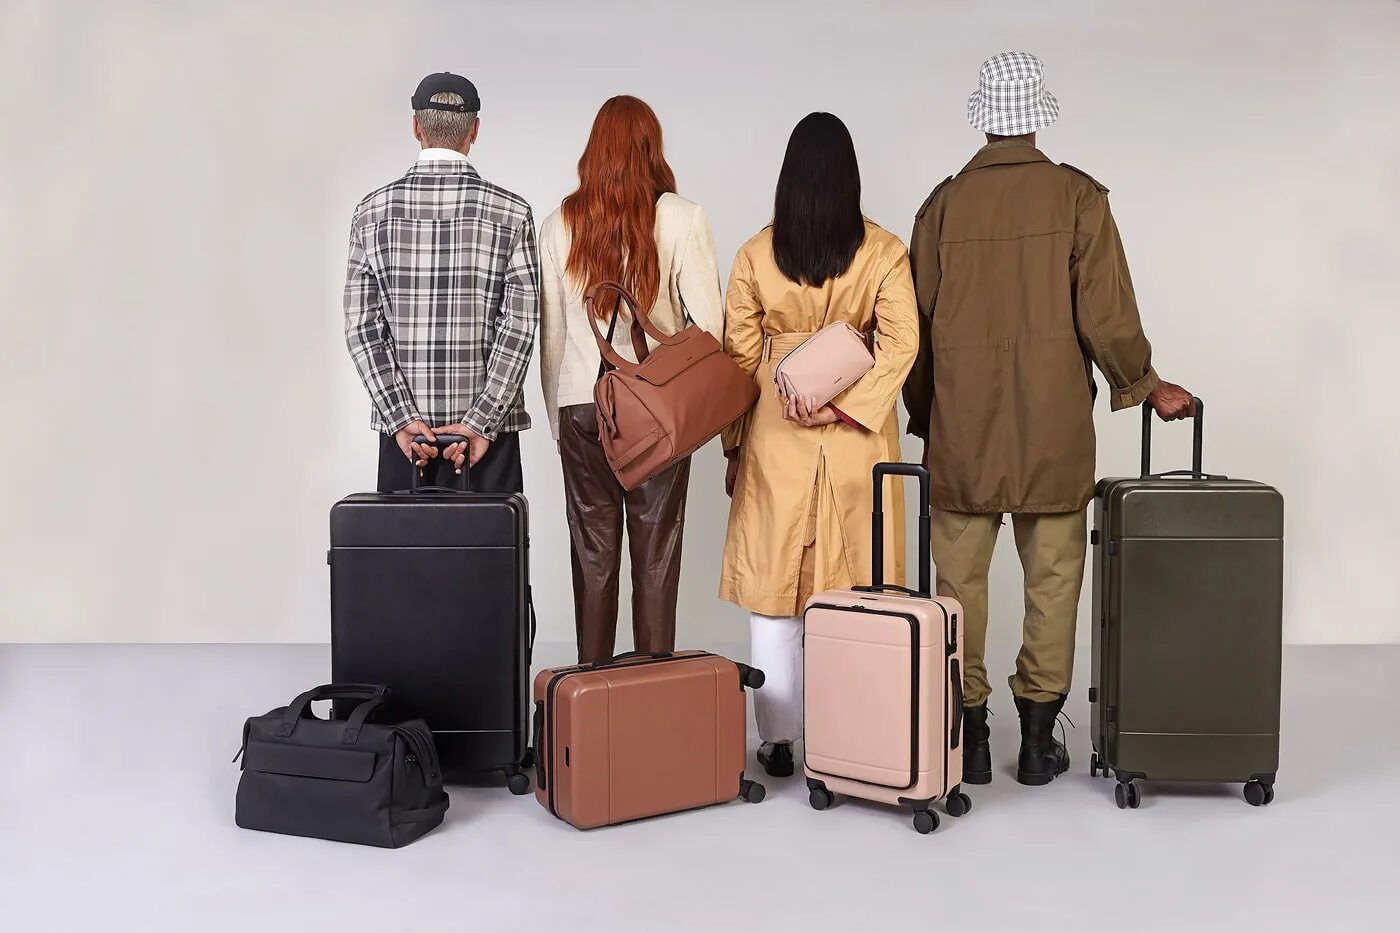 A lot of bags. Чемодан Luggage. Студент с чемоданом. Luggage фотосессия на фоне. Luggage Travel Bag.